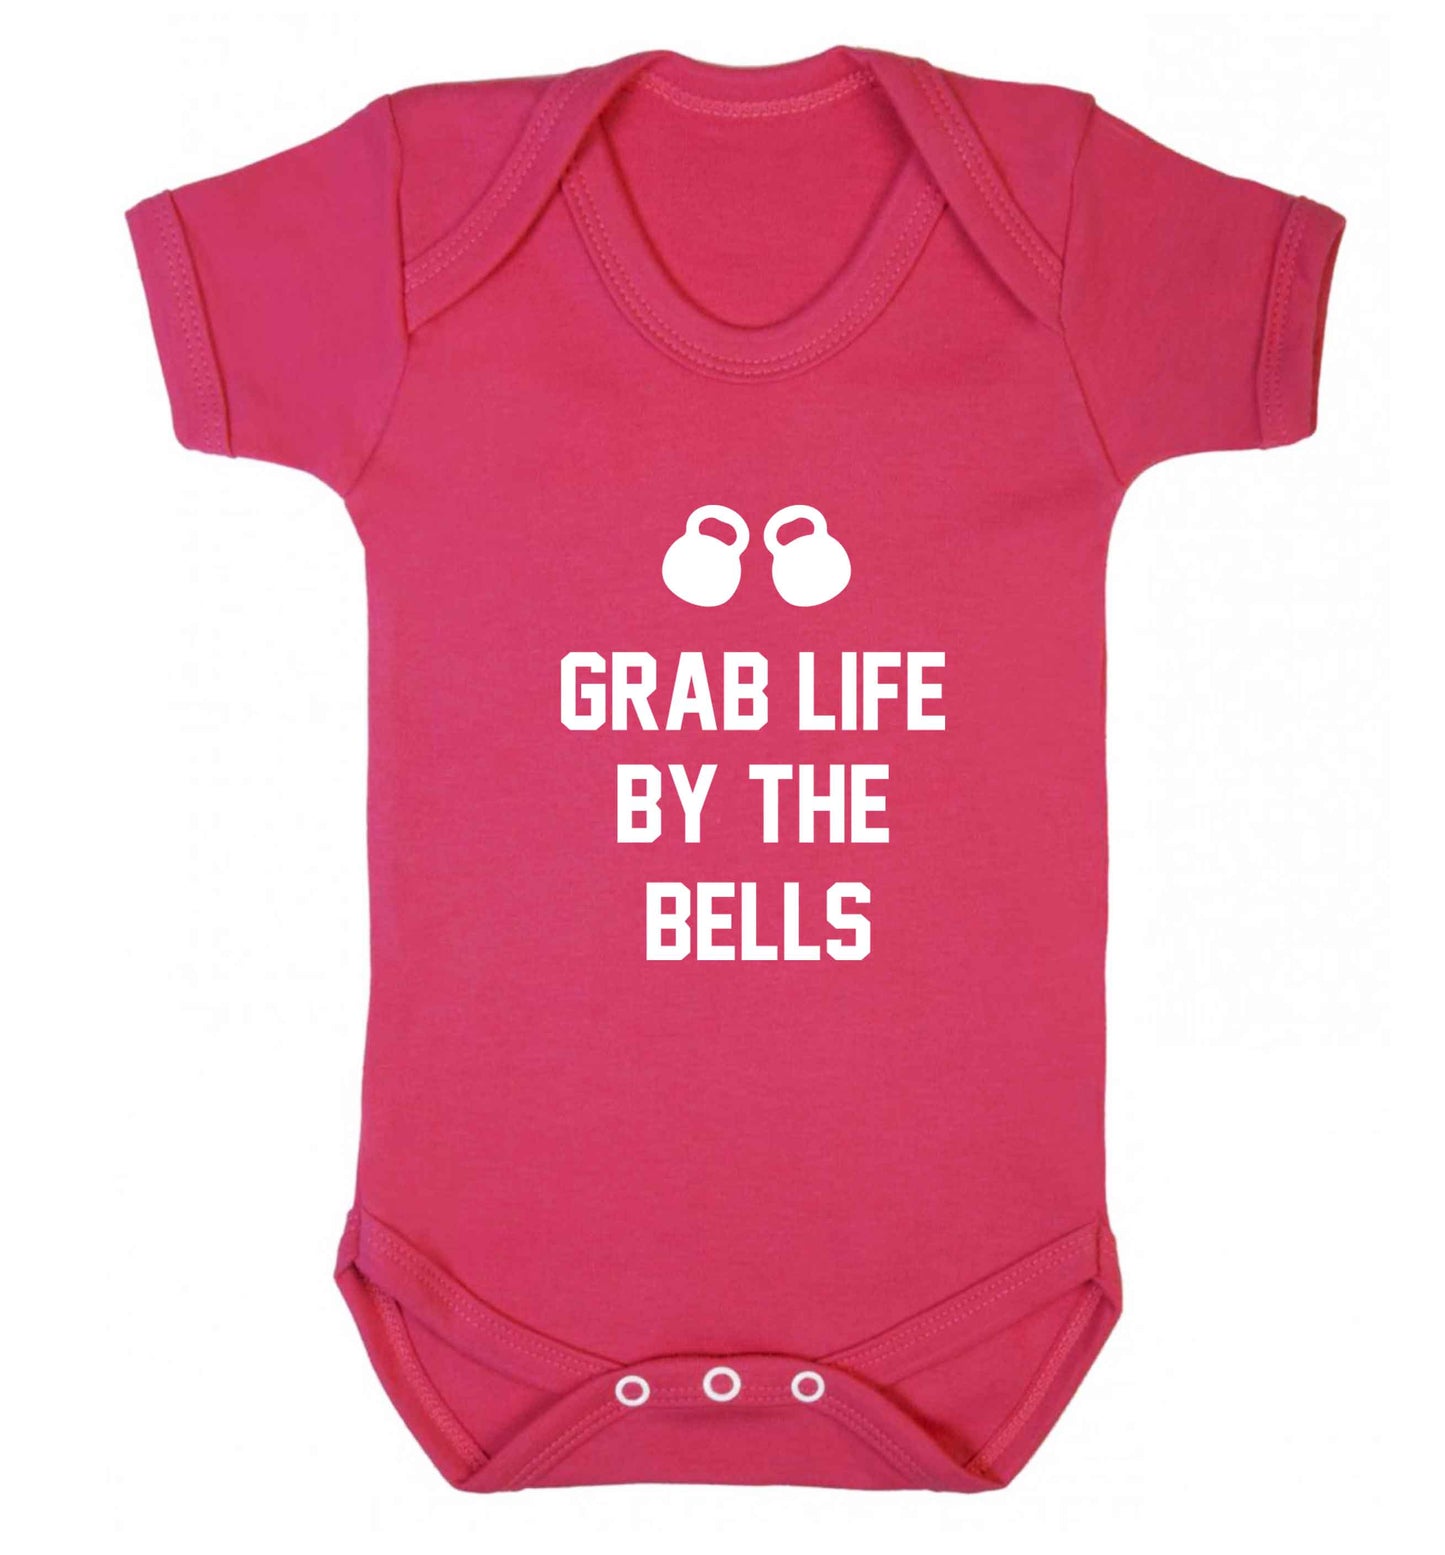 Grab life by the bells baby vest dark pink 18-24 months